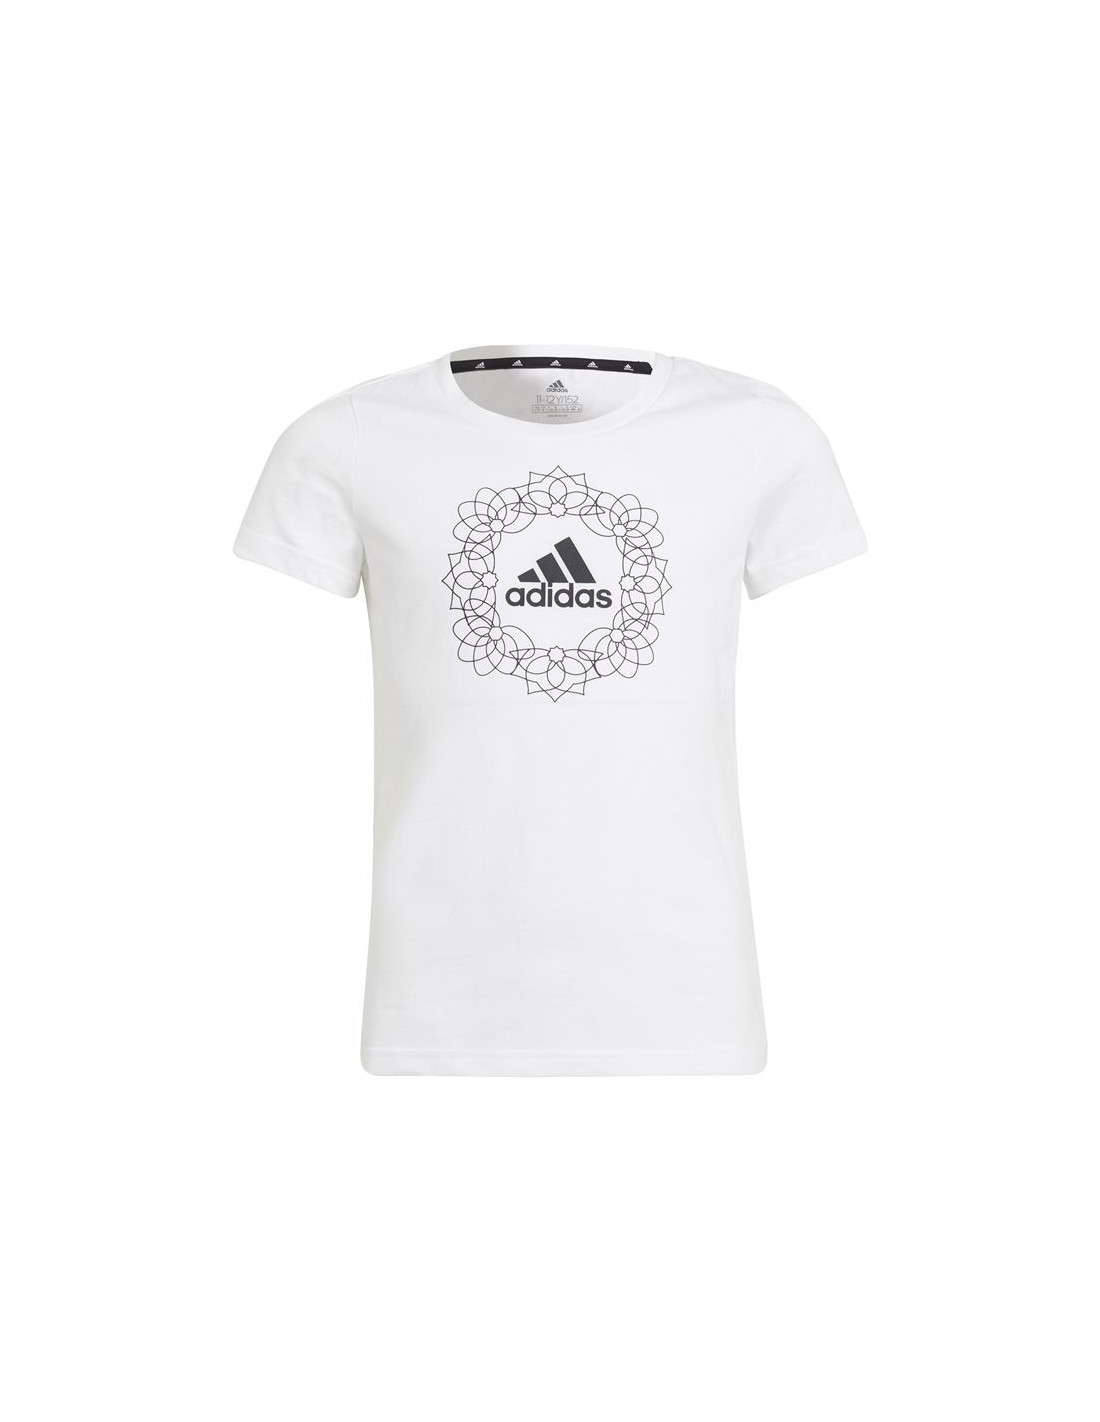 Camiseta adidas graphic white